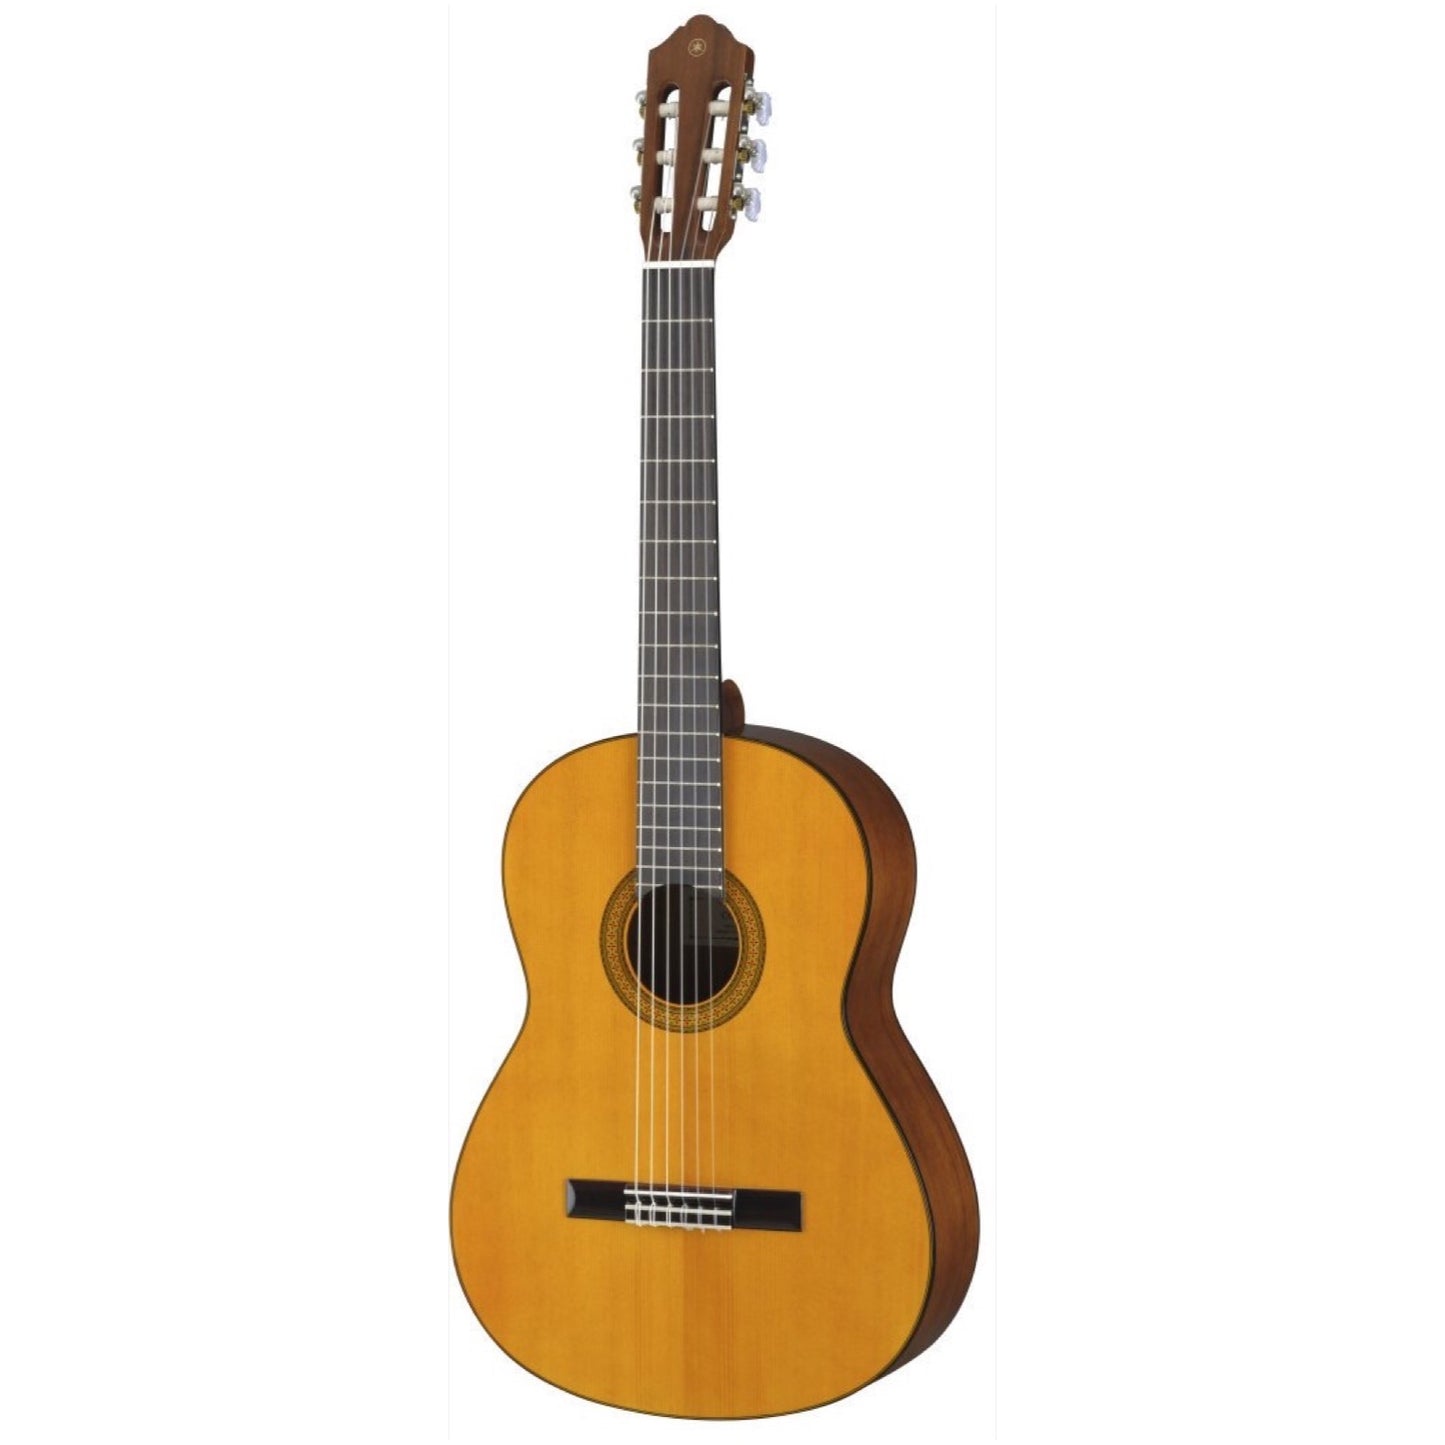 Yamaha CG102 Classical Acoustic Guitar